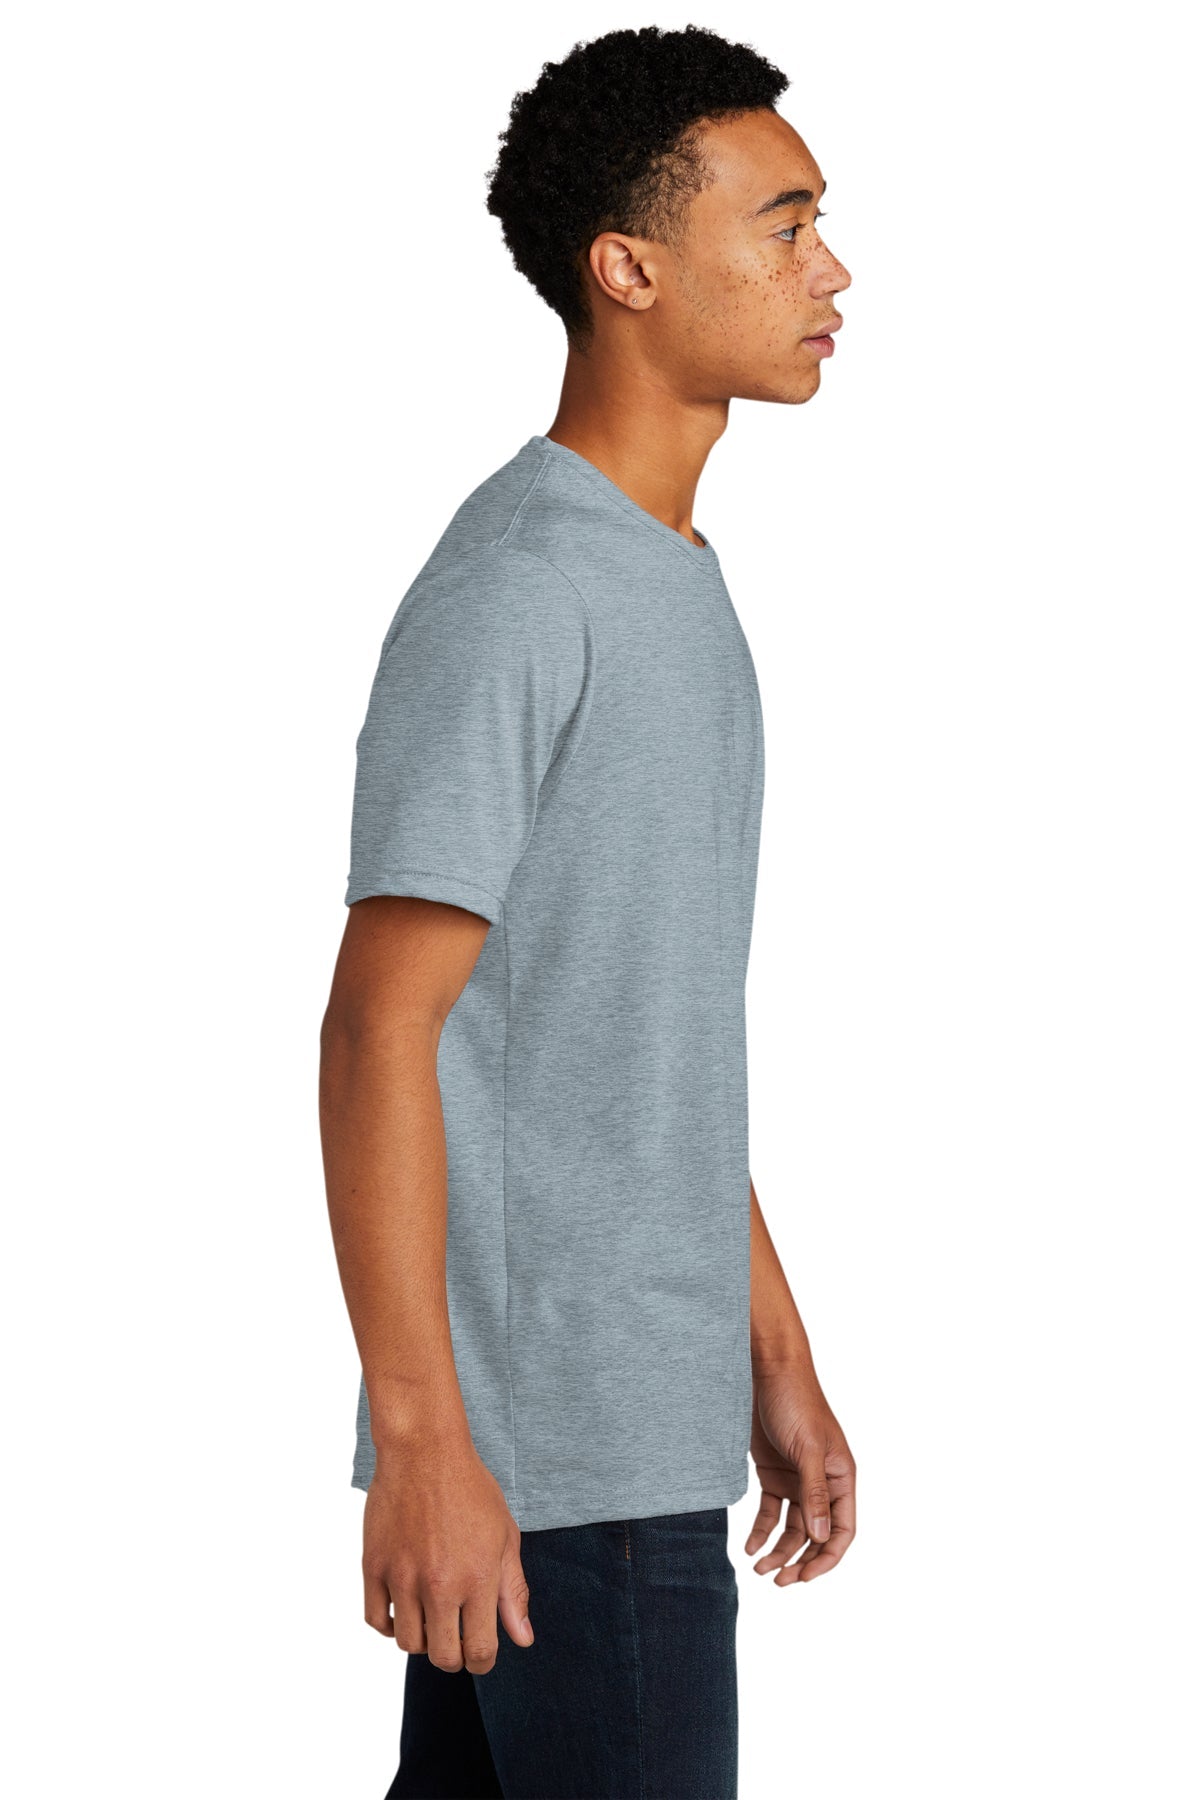 Next Level Unisex Poly Cotton Custom T-Shirts, Stonewash Denim